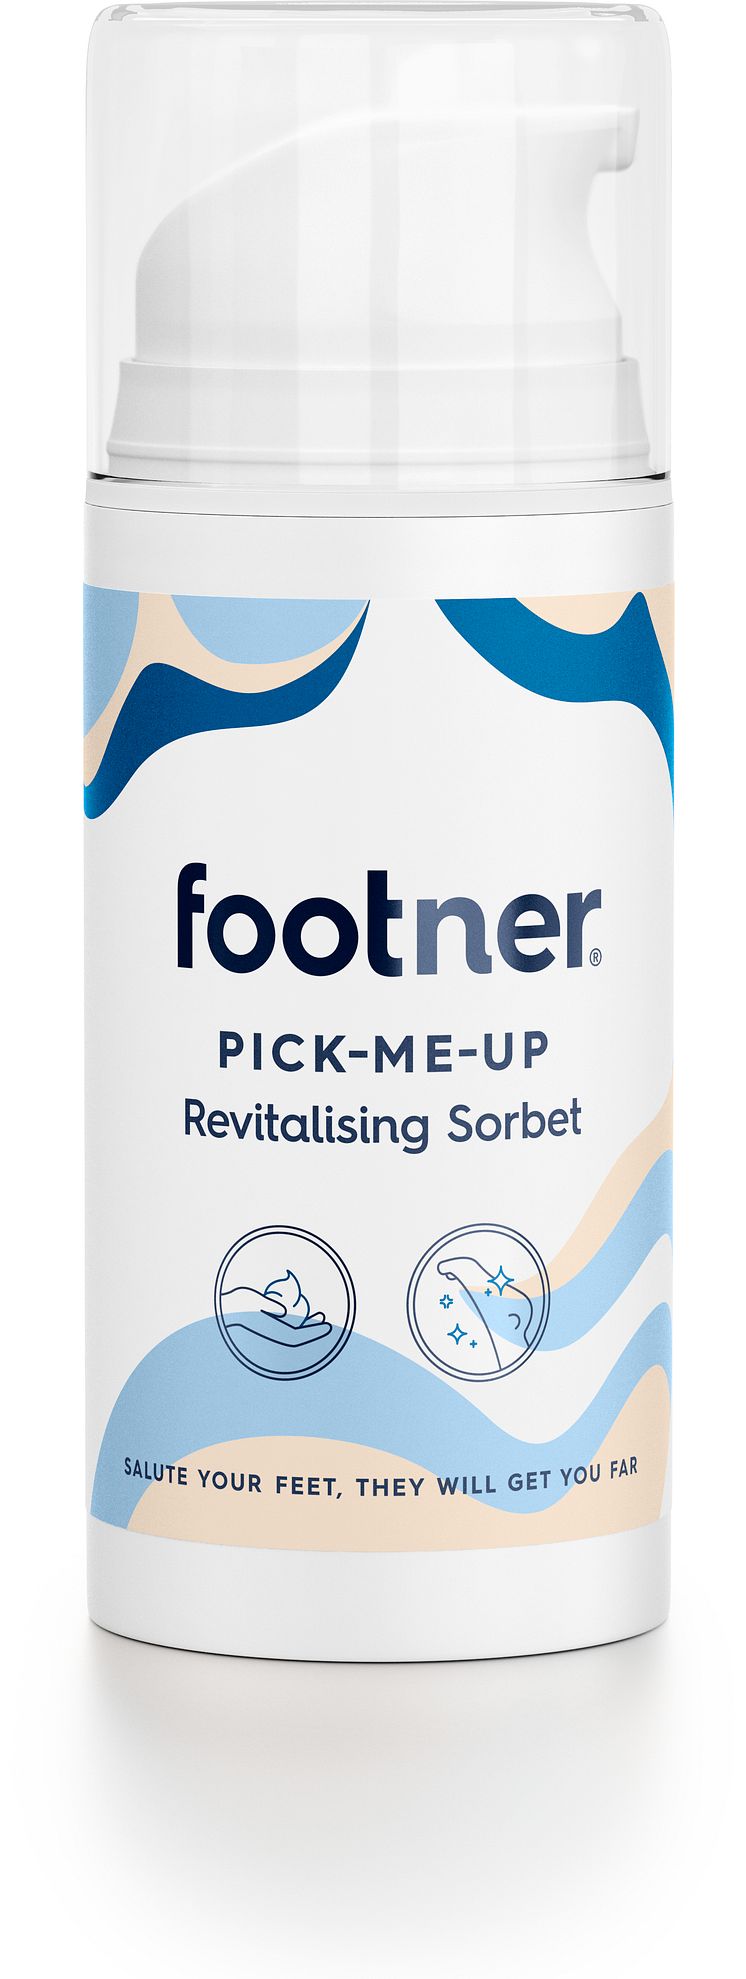 Footner Revitalising Sorbet